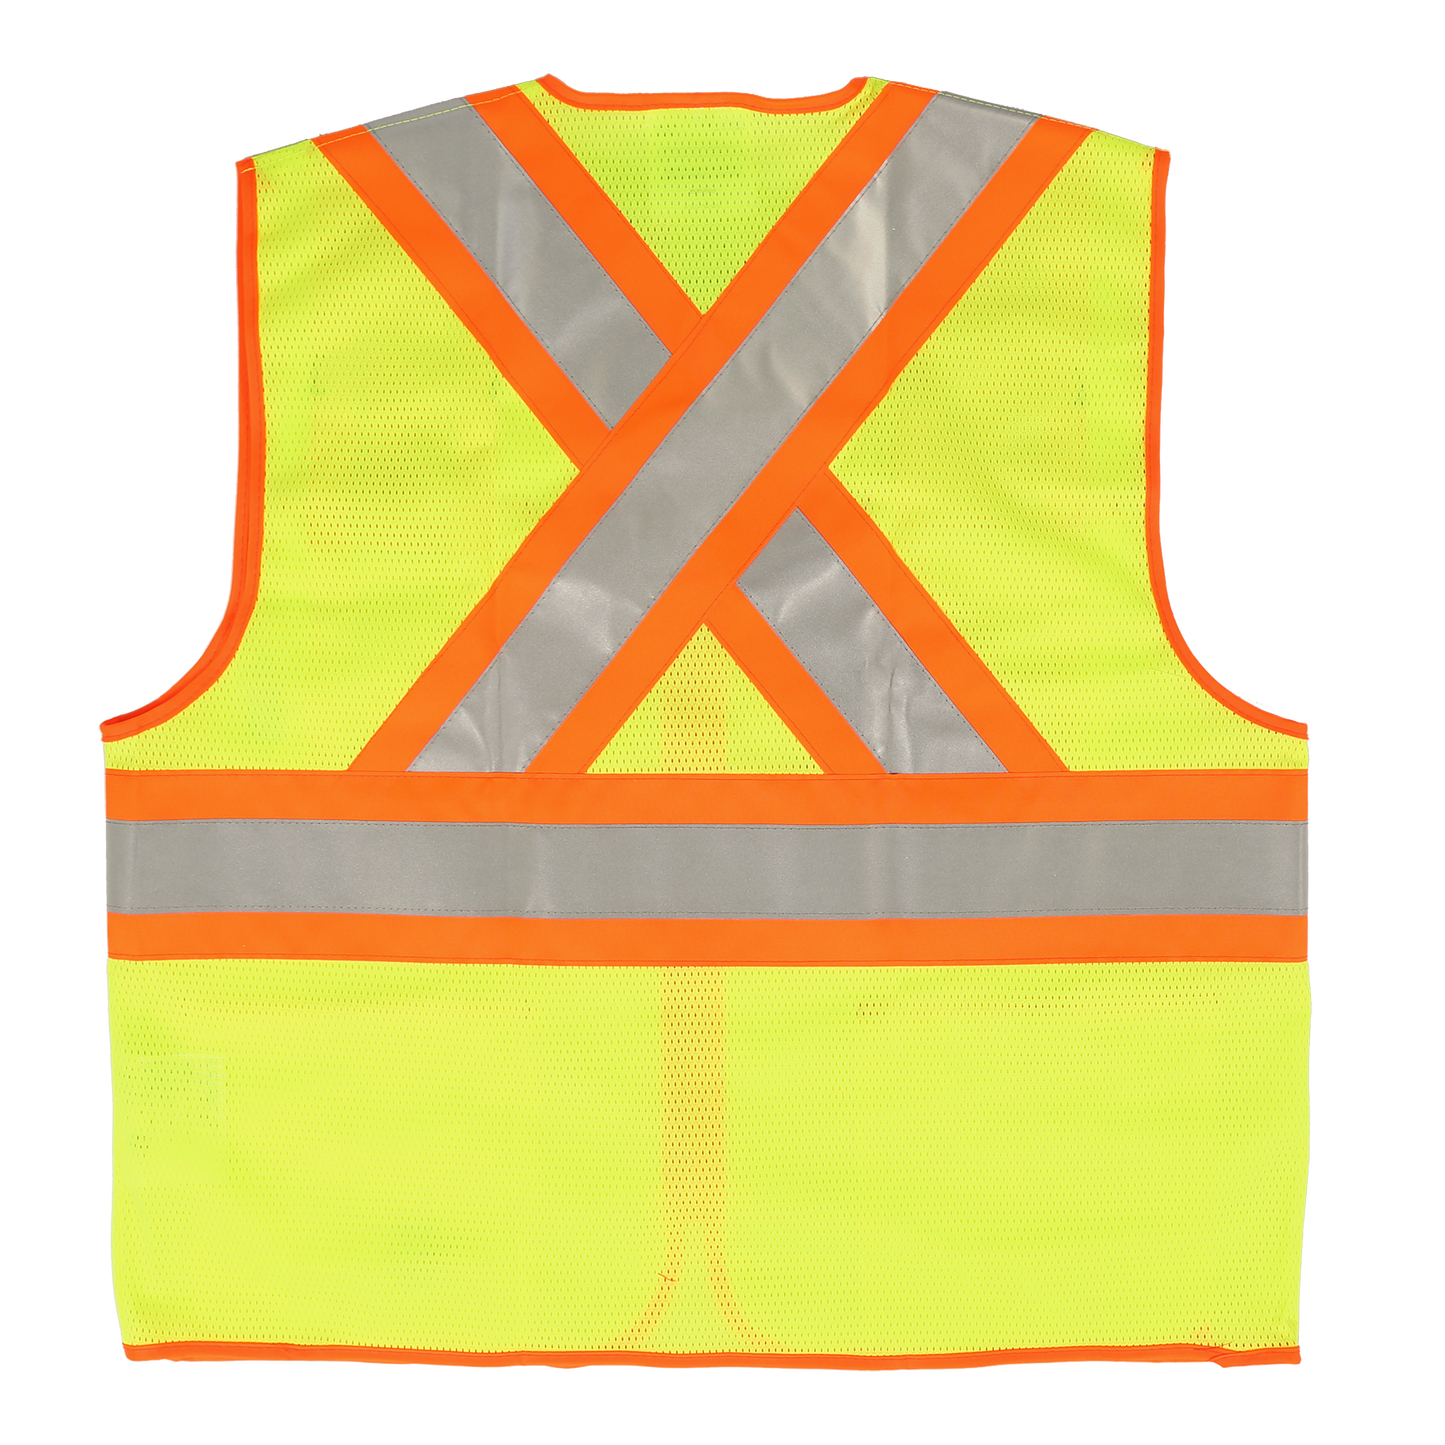 Open Road® Zipper Safety Vest 6112